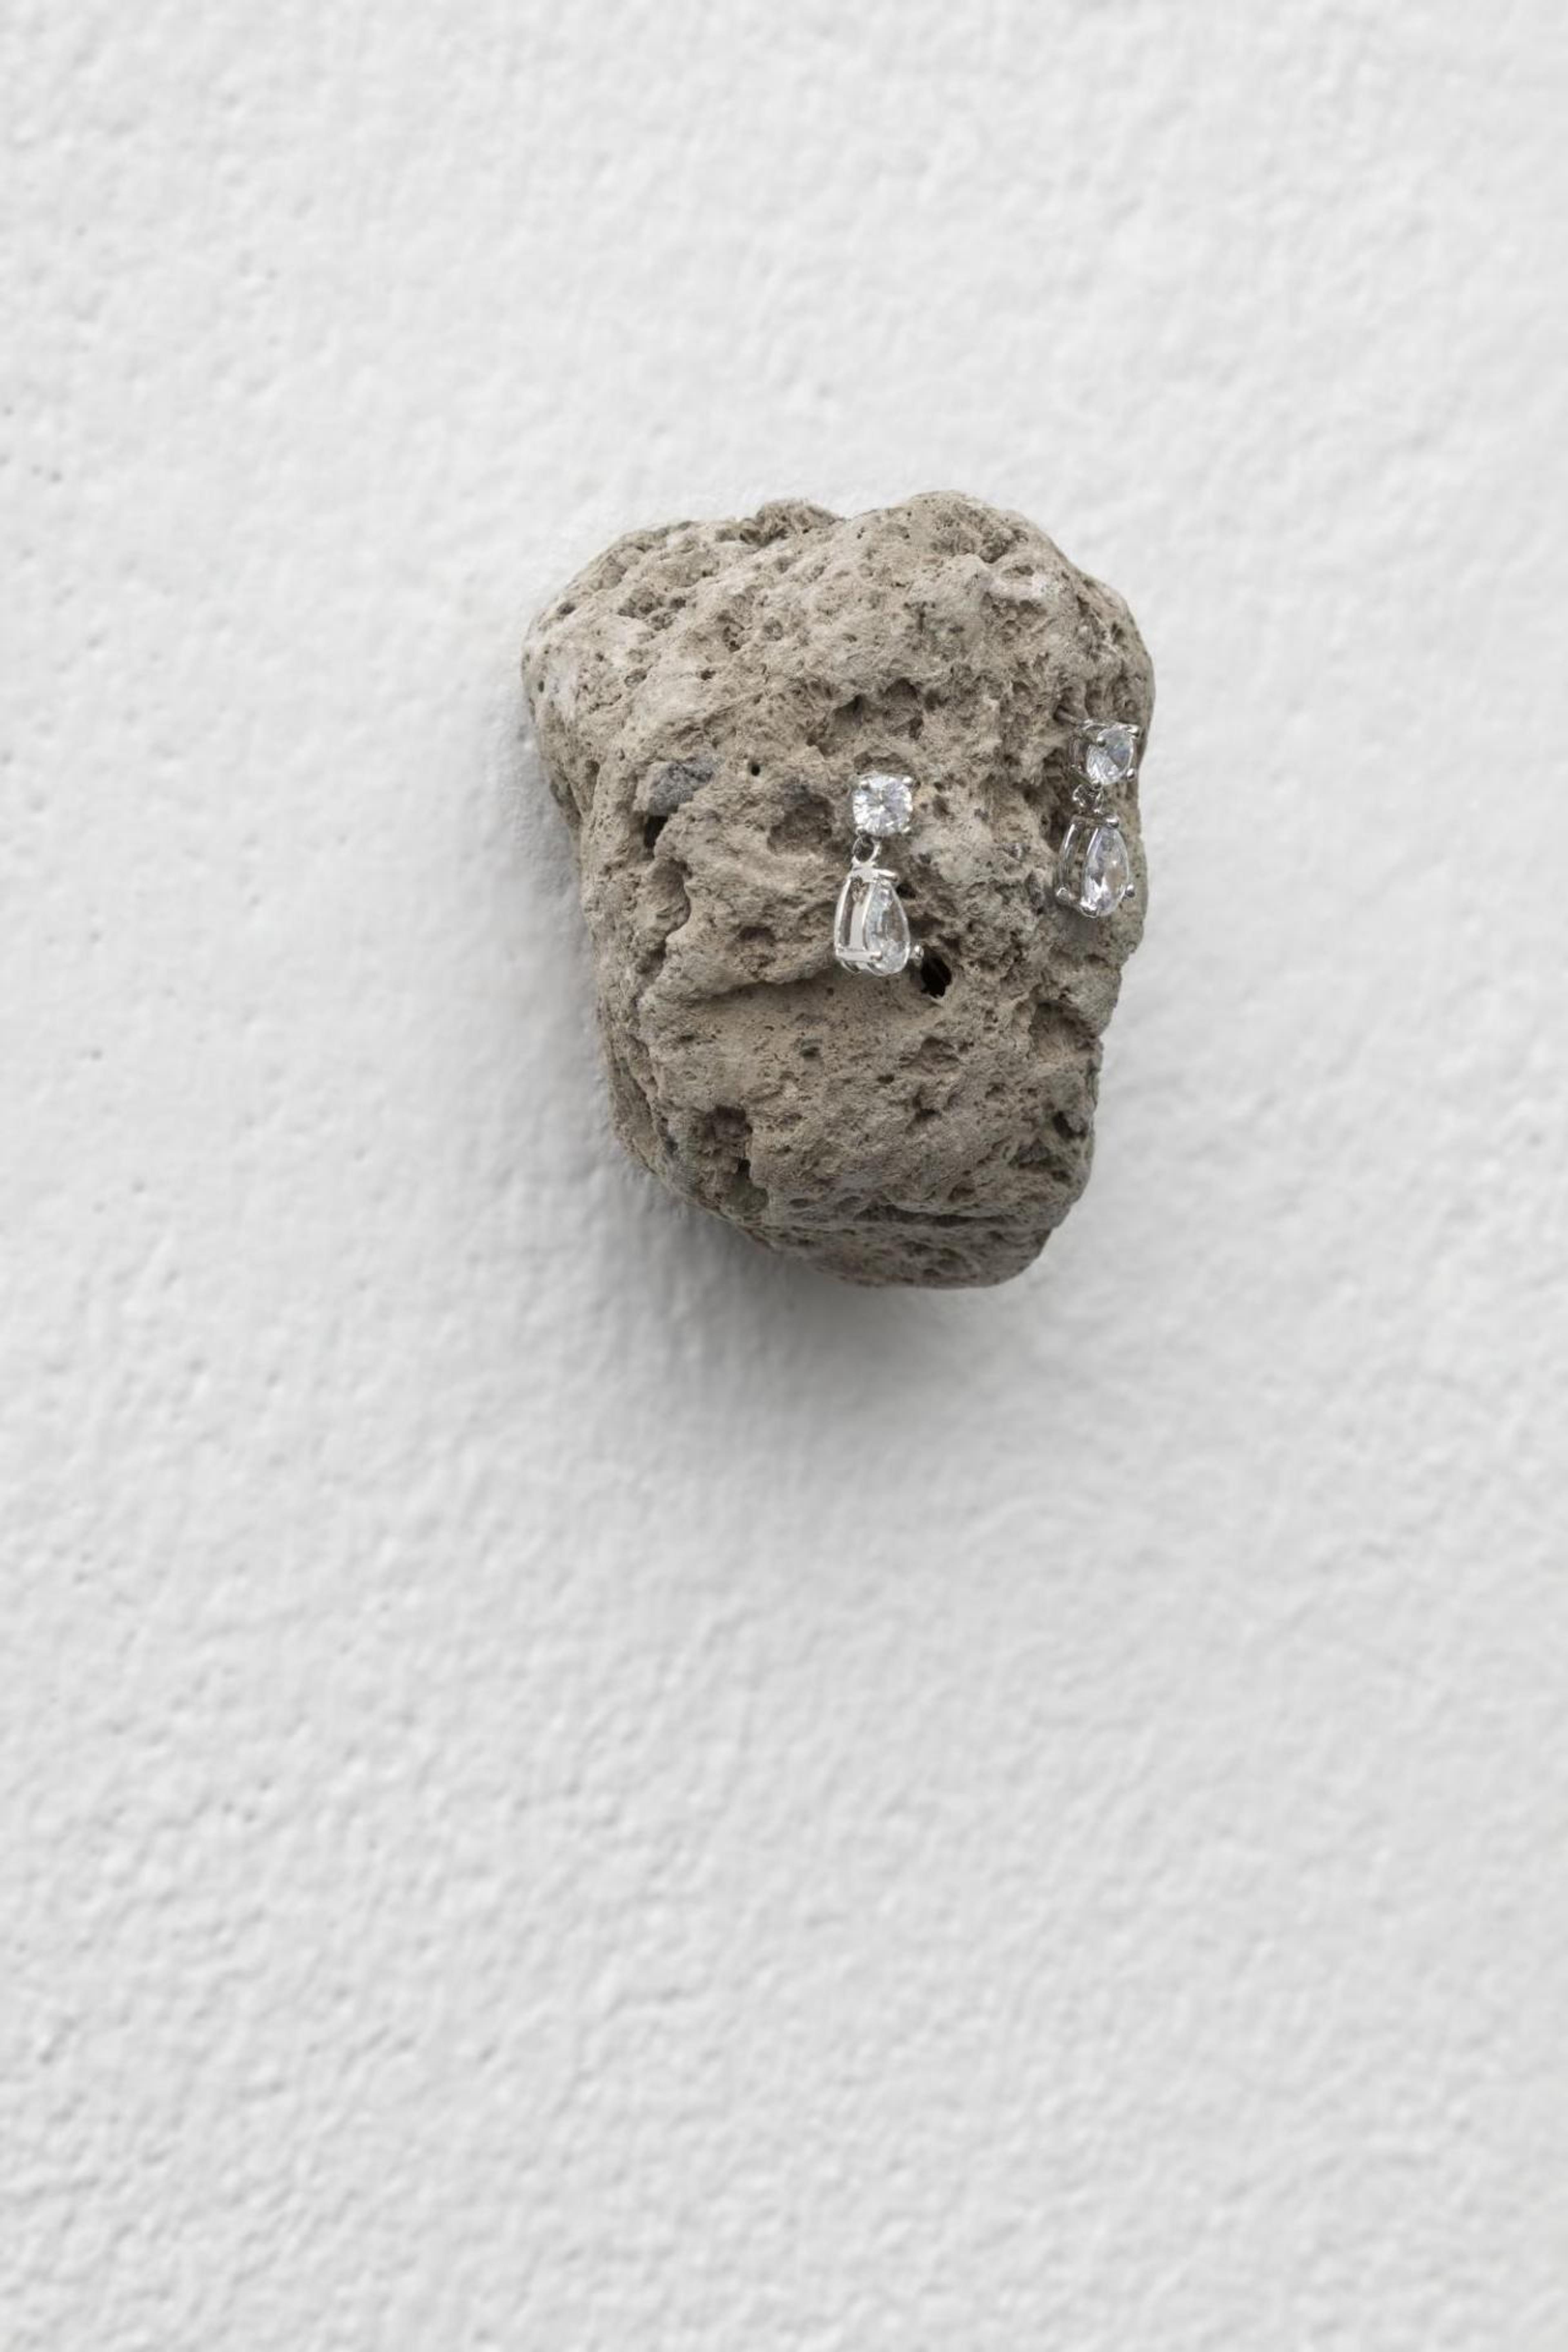 Nina Beier Crybaby , 2019 Foot scrub pumice stone, faux gemstone earrings